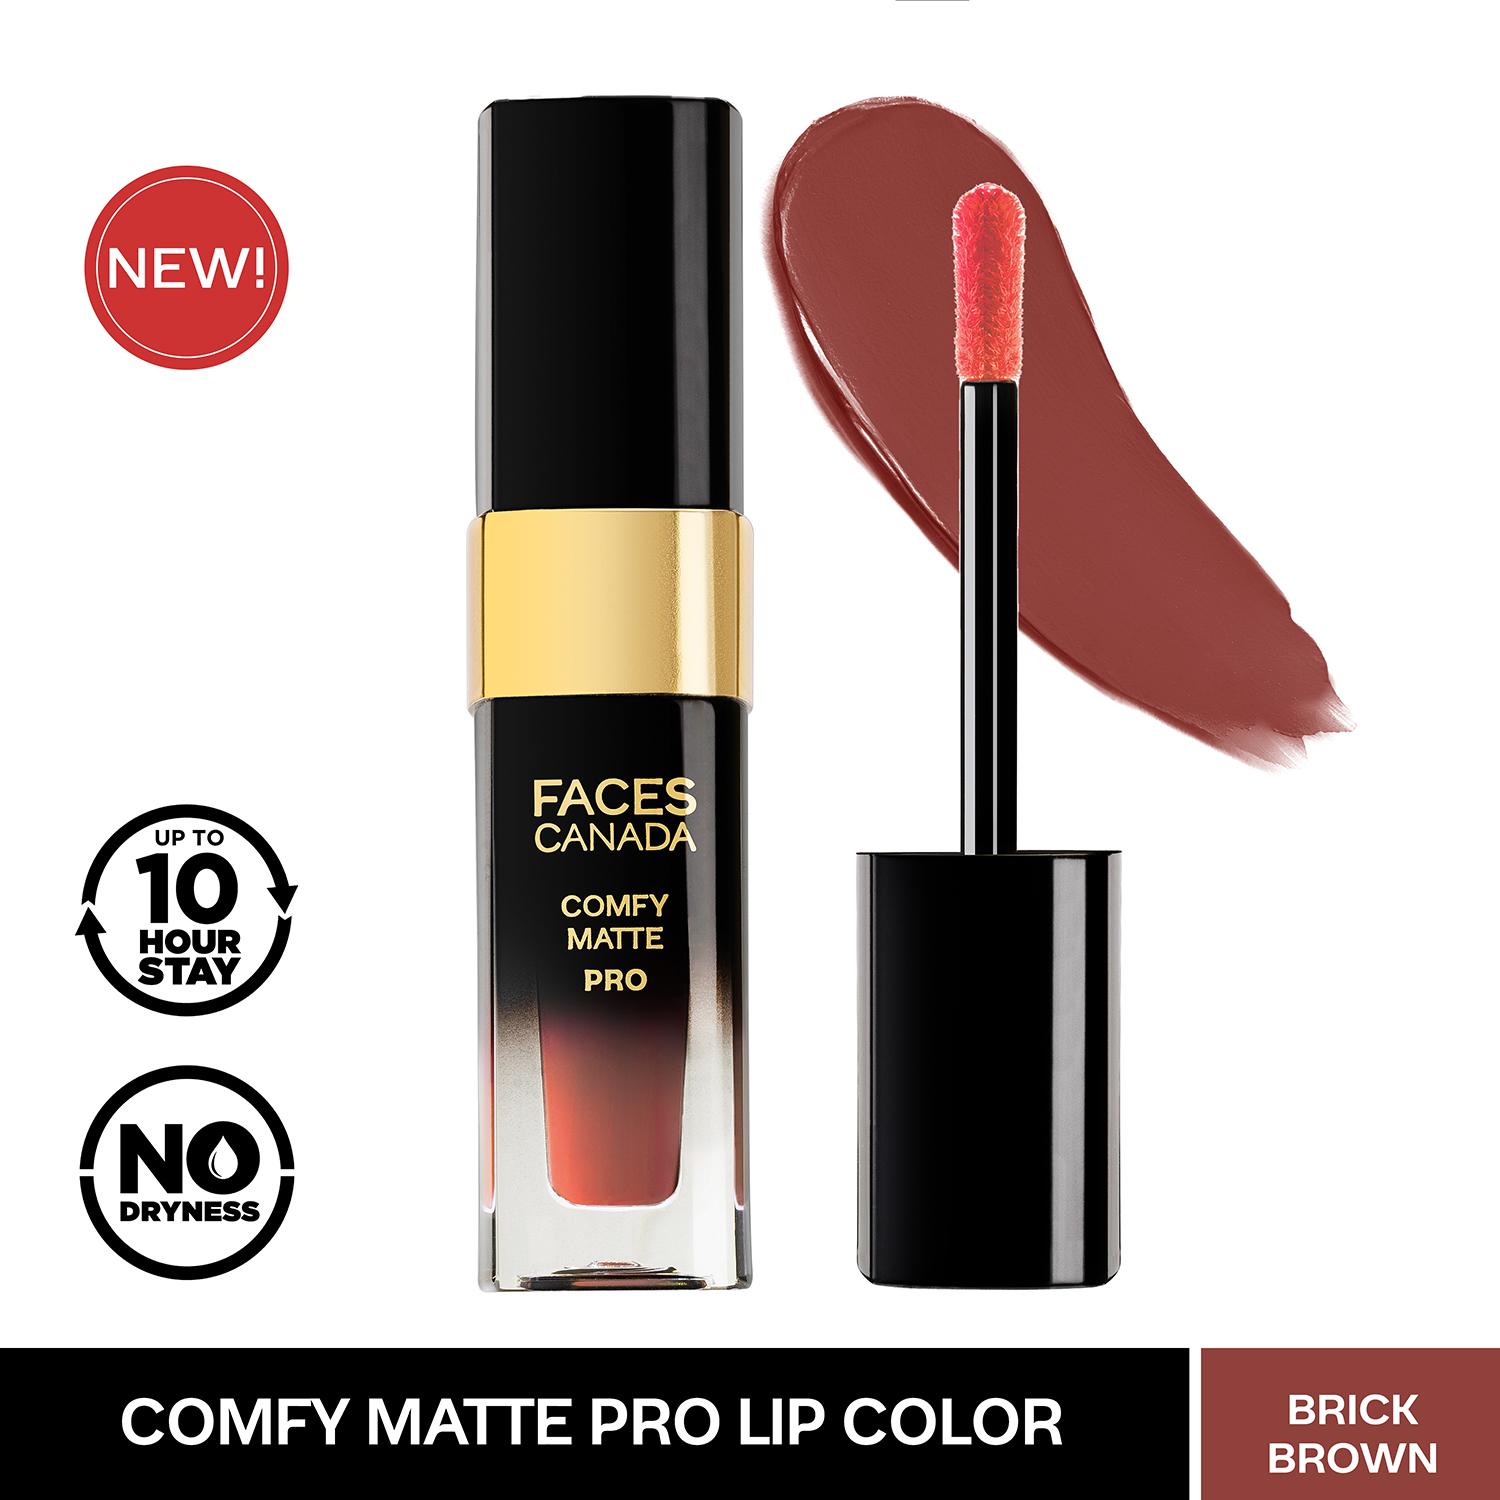 Faces Canada | Faces Canada Comfy Matte Pro Liquid Lipstick - Brick Brown 08, 10HR Stay, No Dryness (5.5 ml)